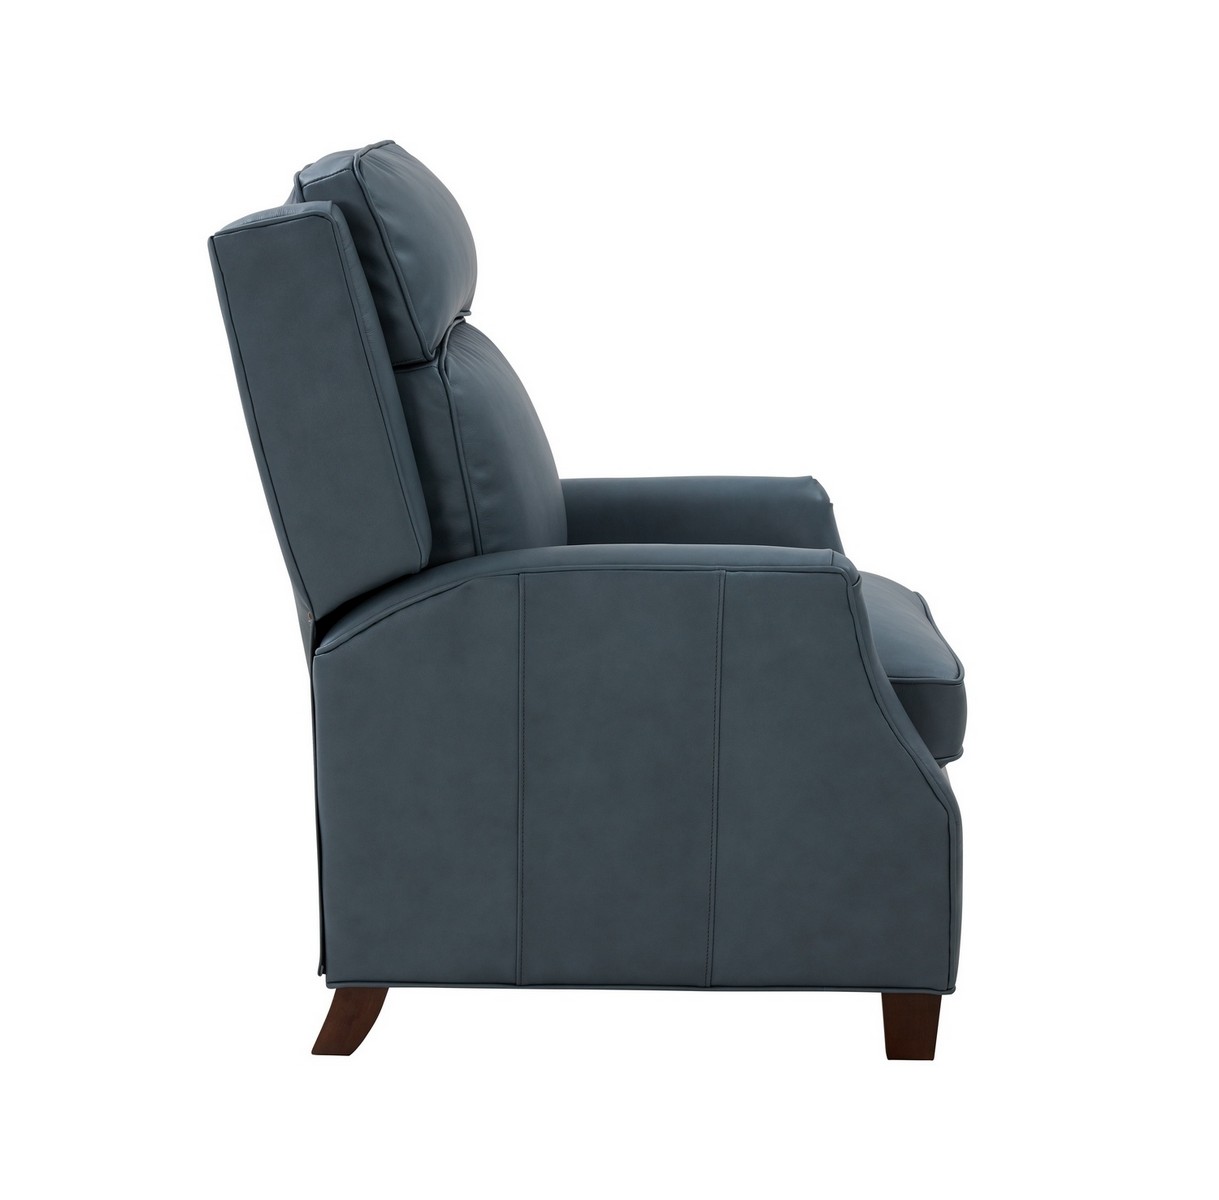 Barcalounger Nixon Recliner Chair - Corbett Steel Gray/All Leather